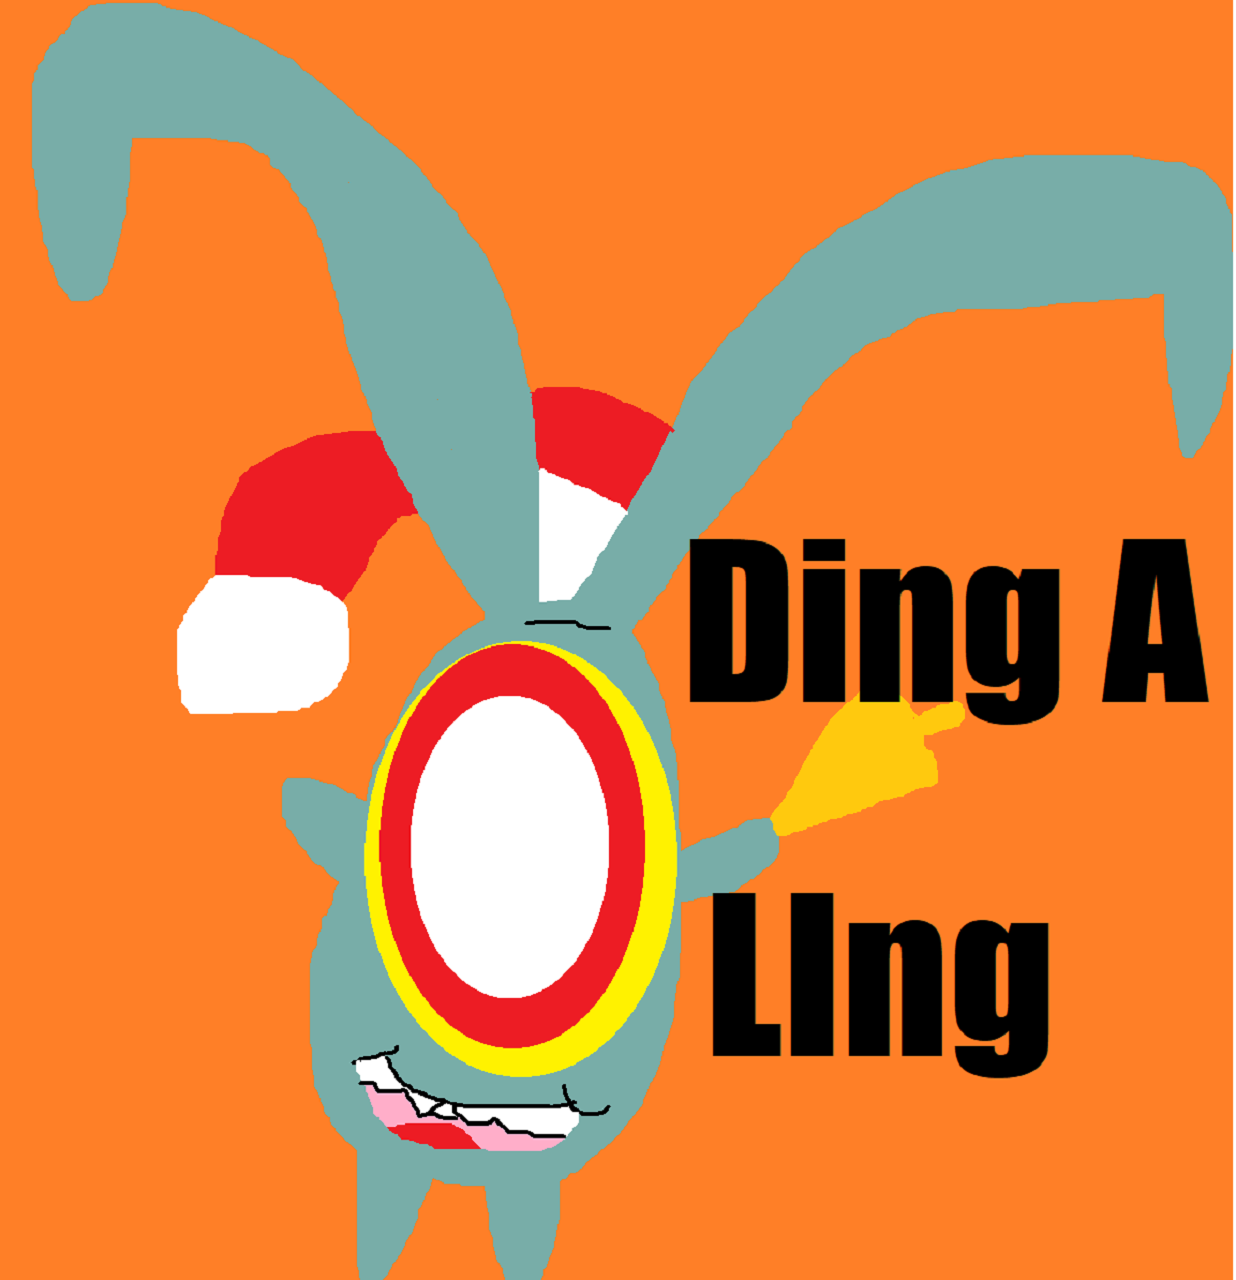 Dingaling by Falconlobo